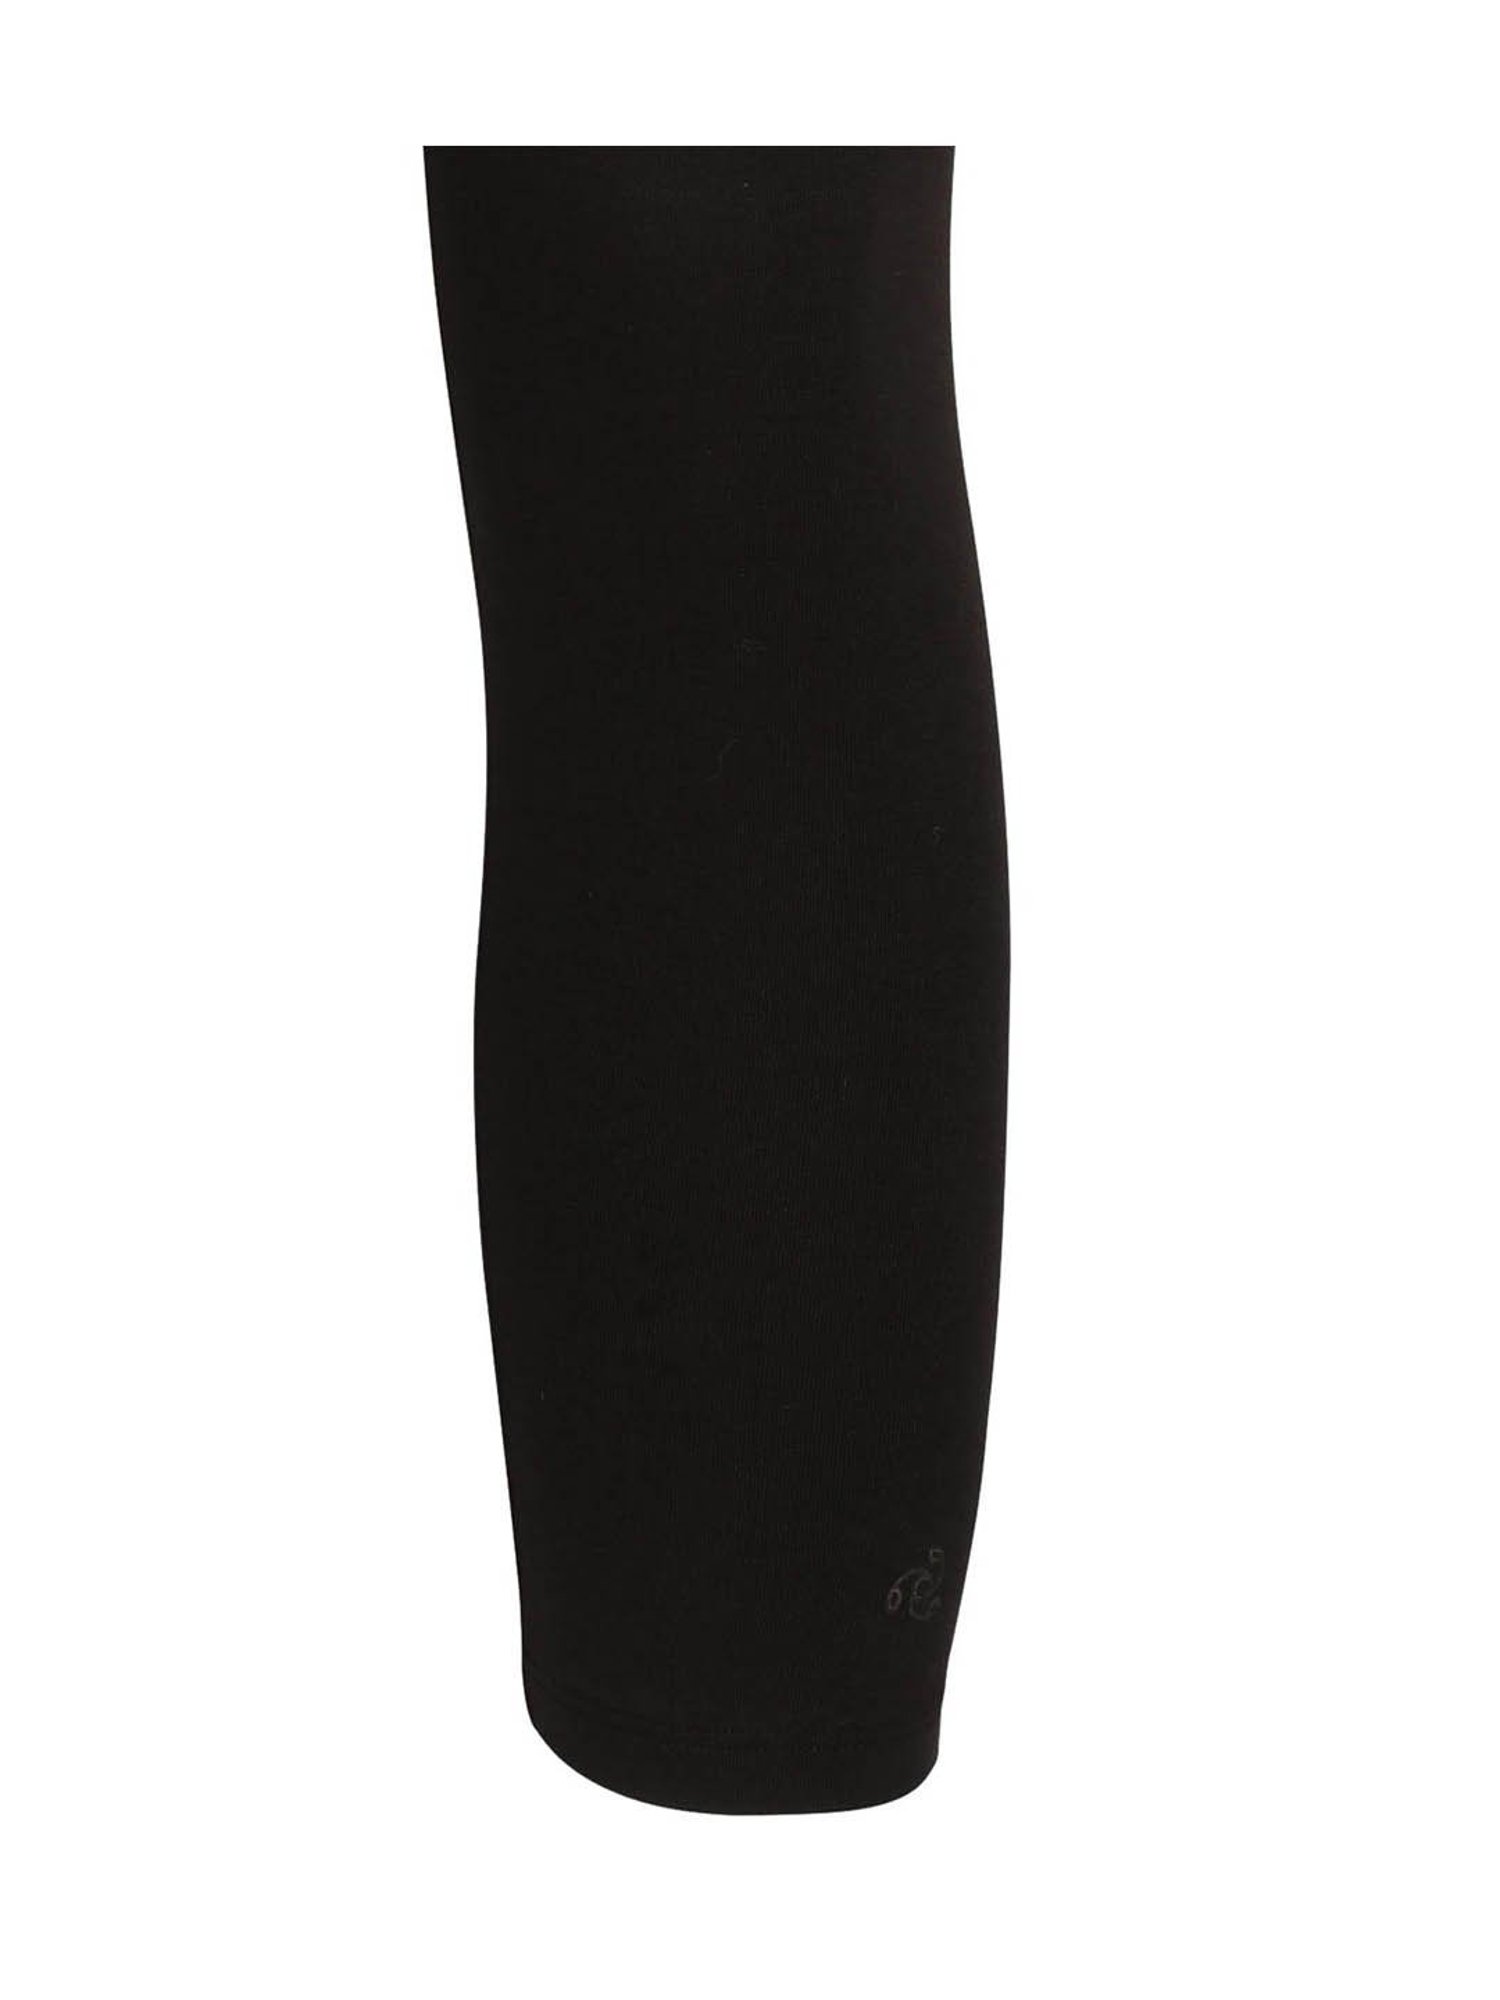 Buy Jockey Kids Black Solid Leggings for Girls Clothing Online @ Tata CLiQ